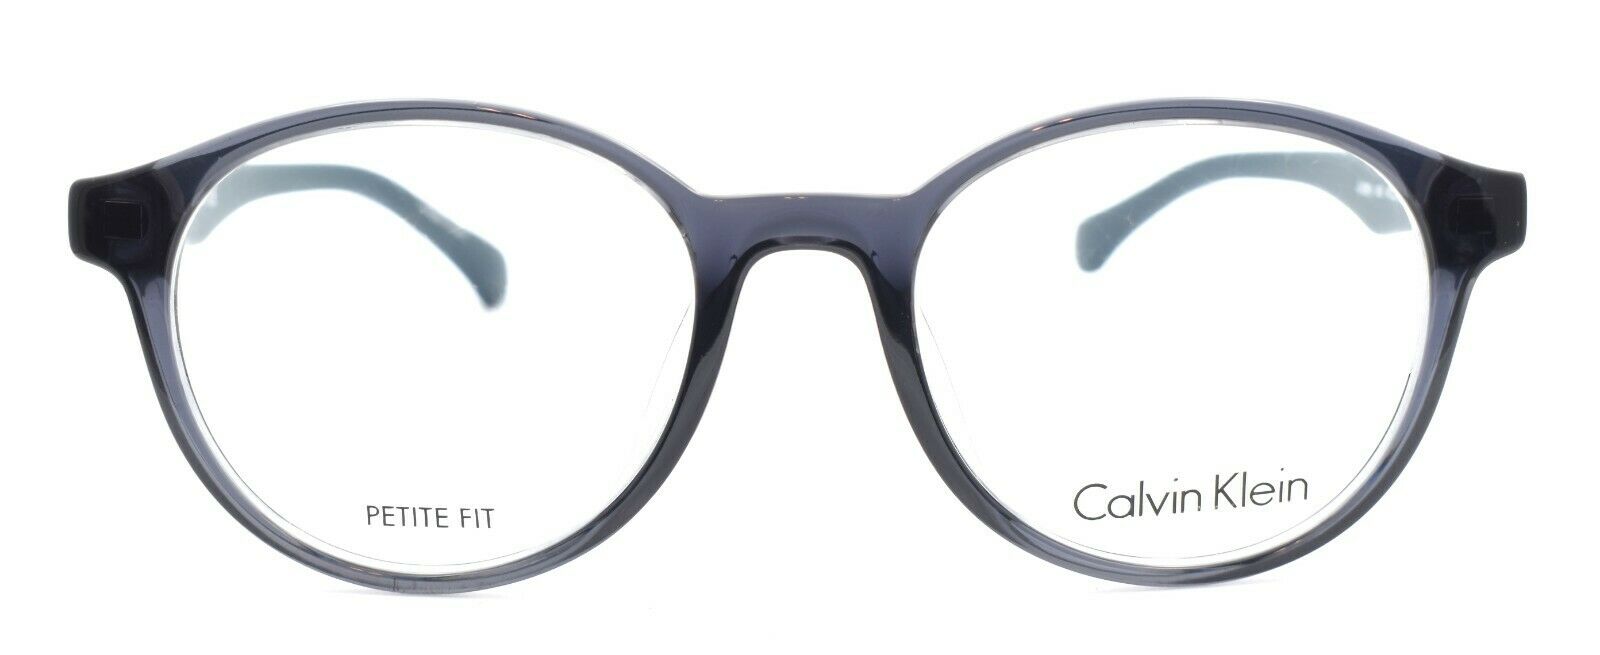 2-Calvin Klein CK5859 438 Eyeglasses Frames Round 47-18-140 Deep Blue-750779078266-IKSpecs